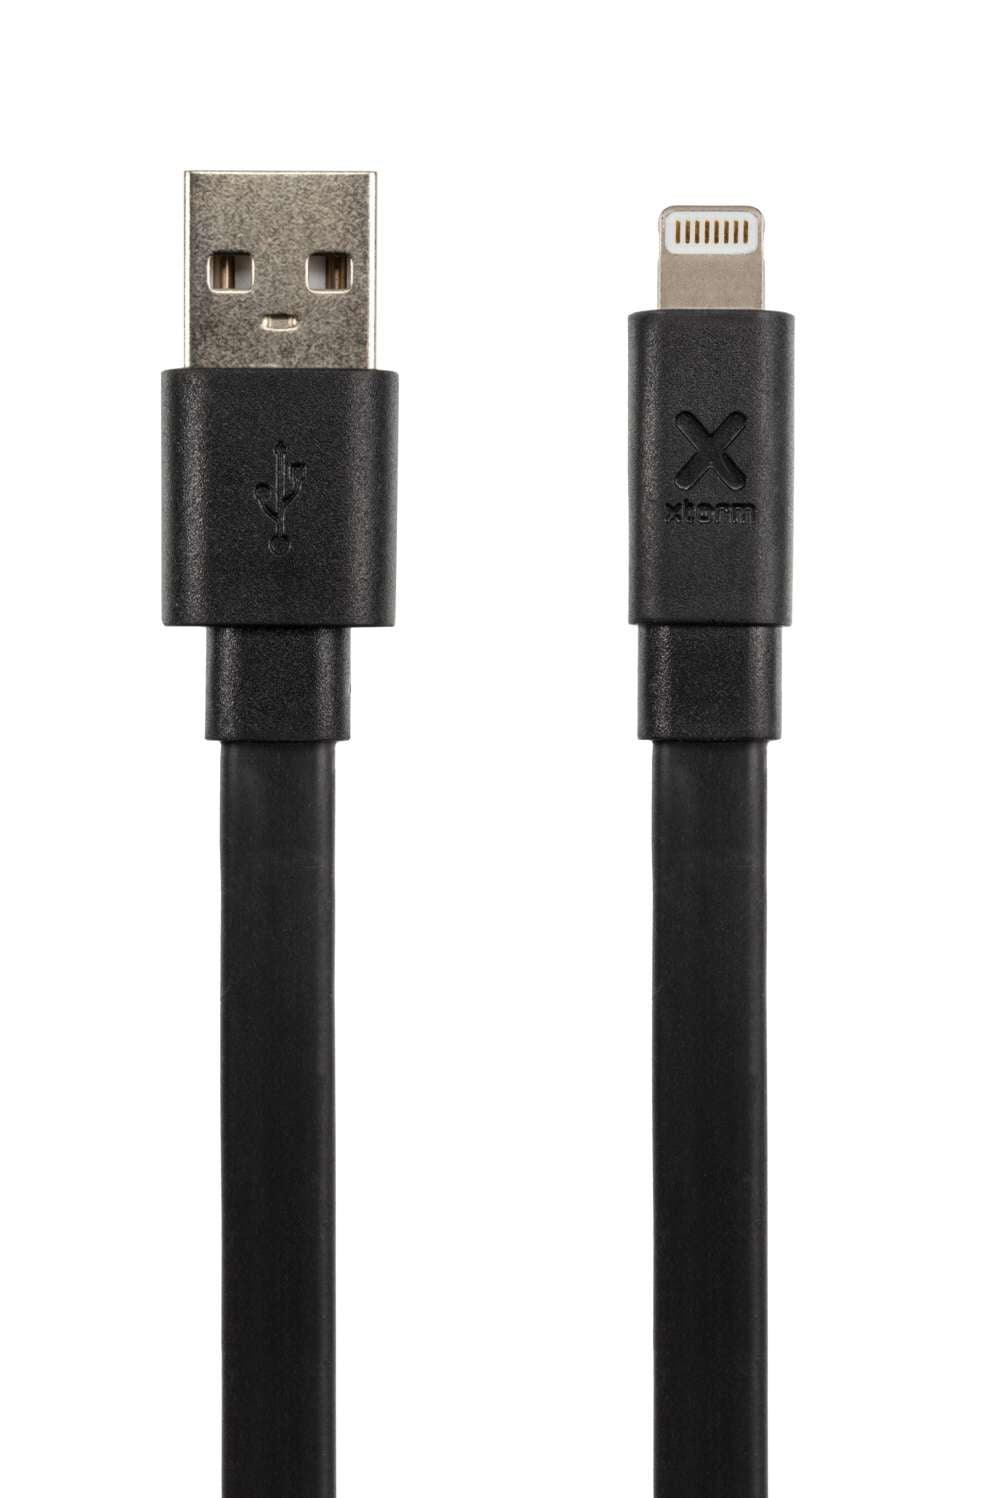 Flat USB to Lightning Cable - 3 Meter - Xtorm EU